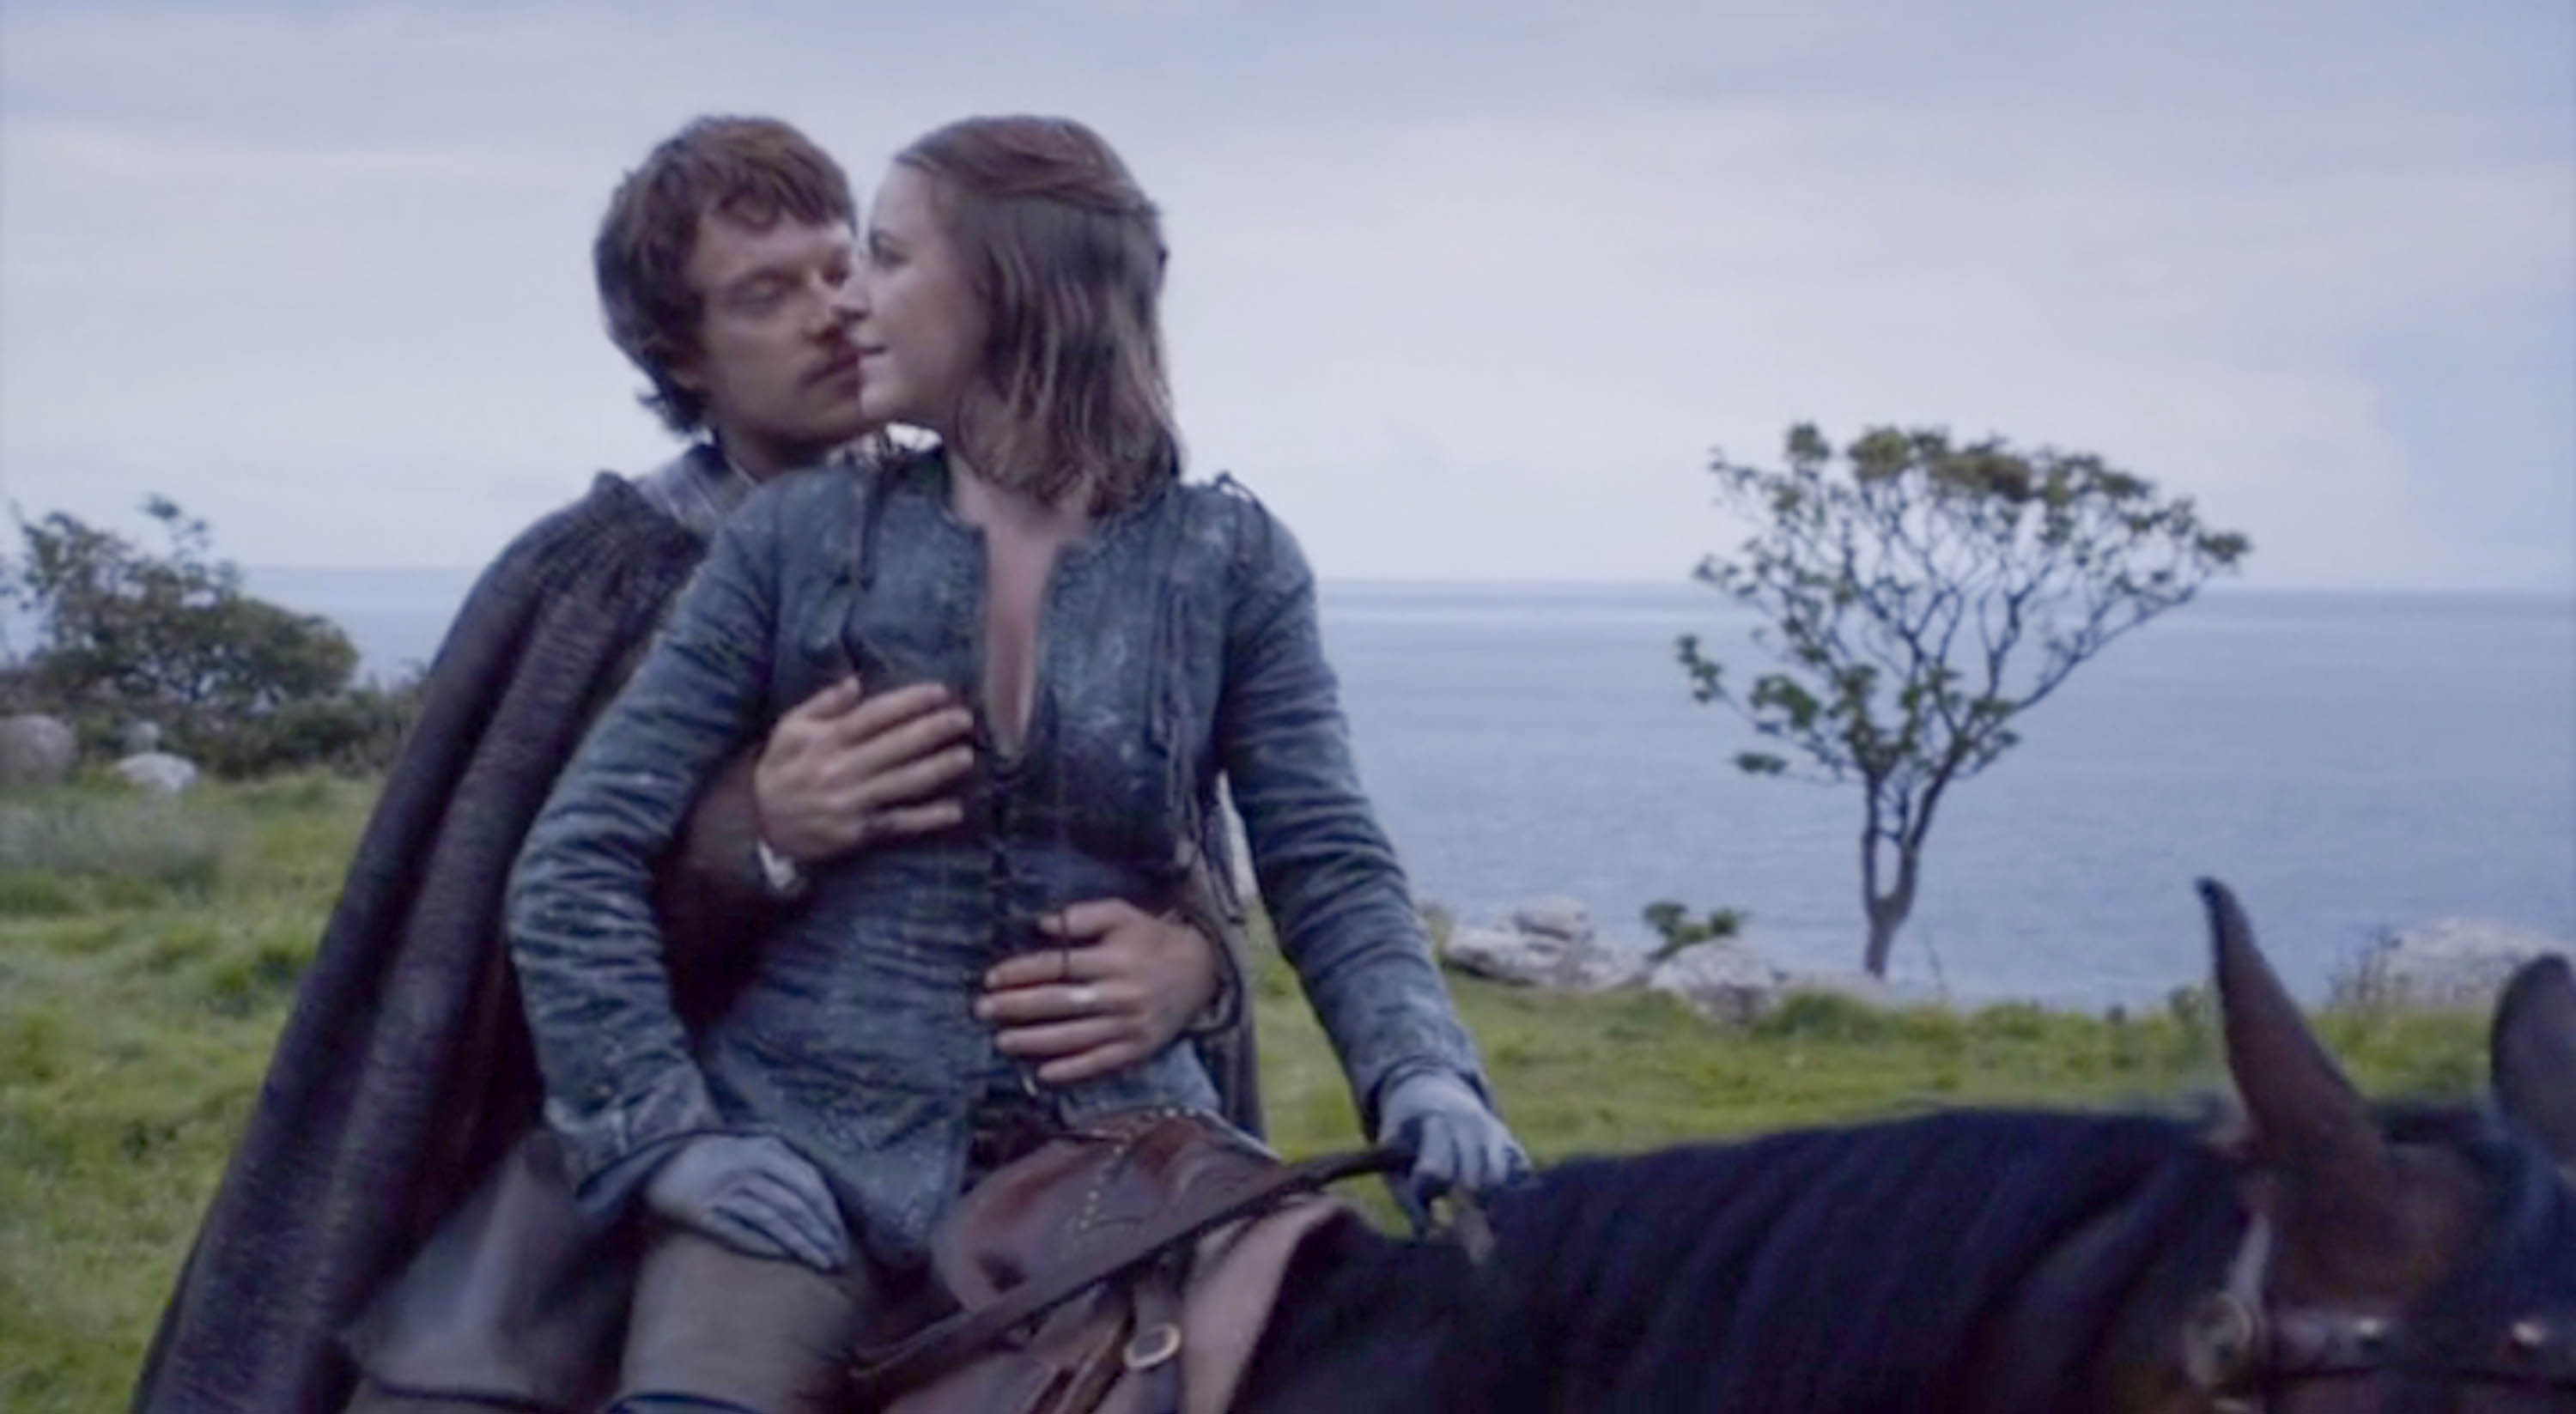 Theon Greyjoy (Alfie Allen) feels up his sister Yara (Gemma Whelan). 